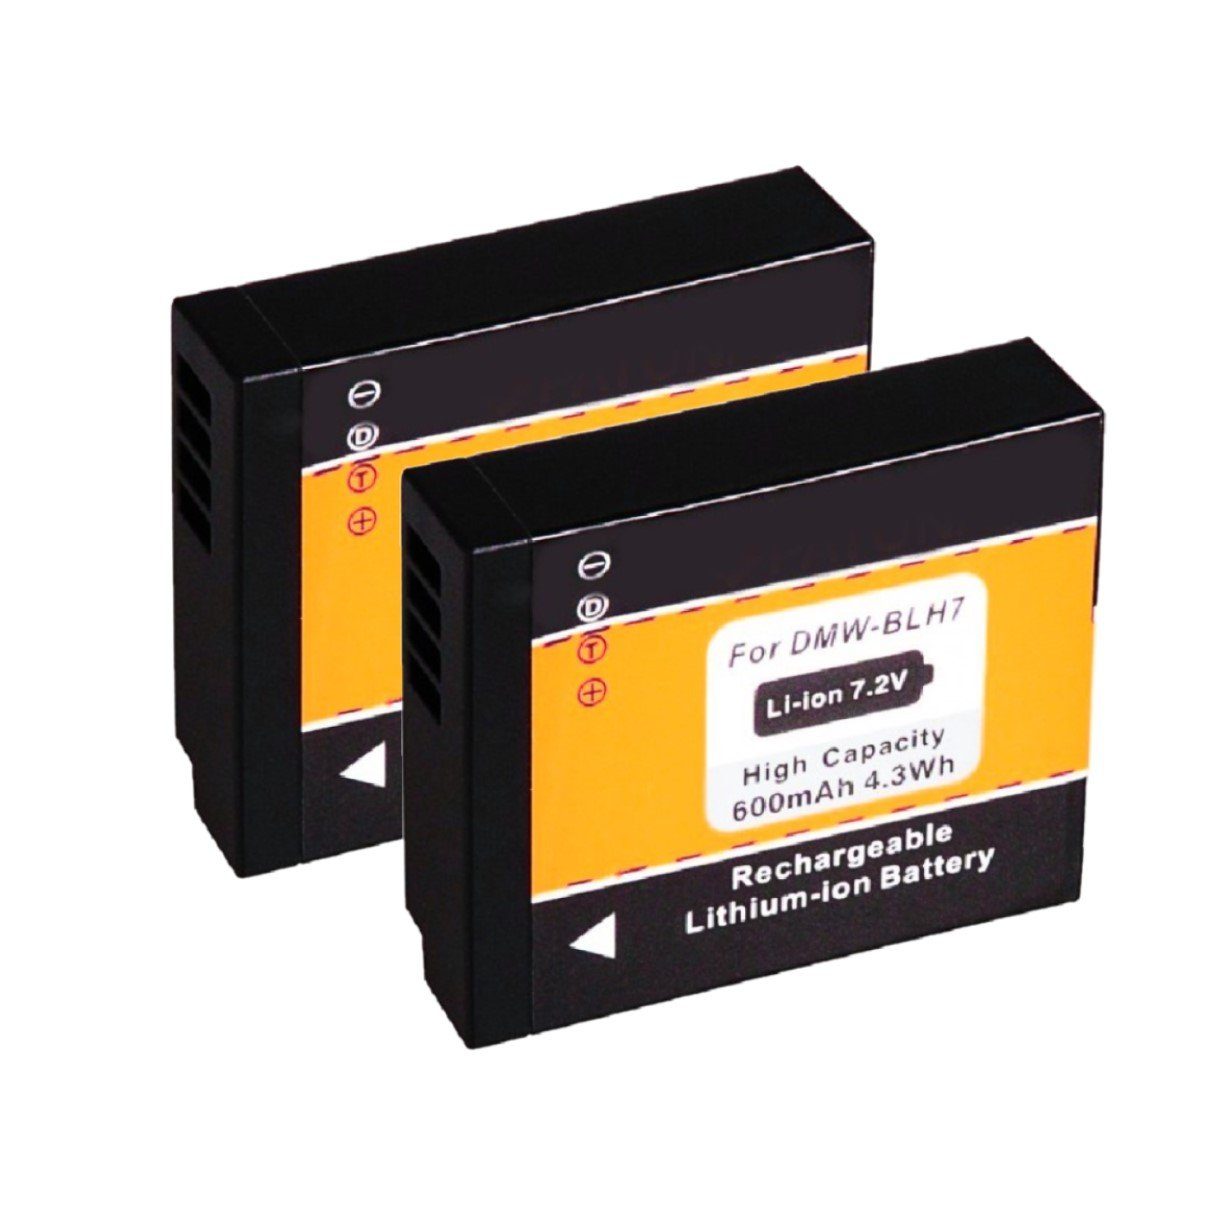 GOLDBATT 2x Akku für Panasonic DMC-GM1 DMW-BLH7E GM1 BLH7E Kamera-Akku Ersatzakku 6000 mAh (7,2 V, 2 St), 100% kompatibel mit den Original Akkus durch maßgefertigte Passform inklusive Überhitzungsschutz